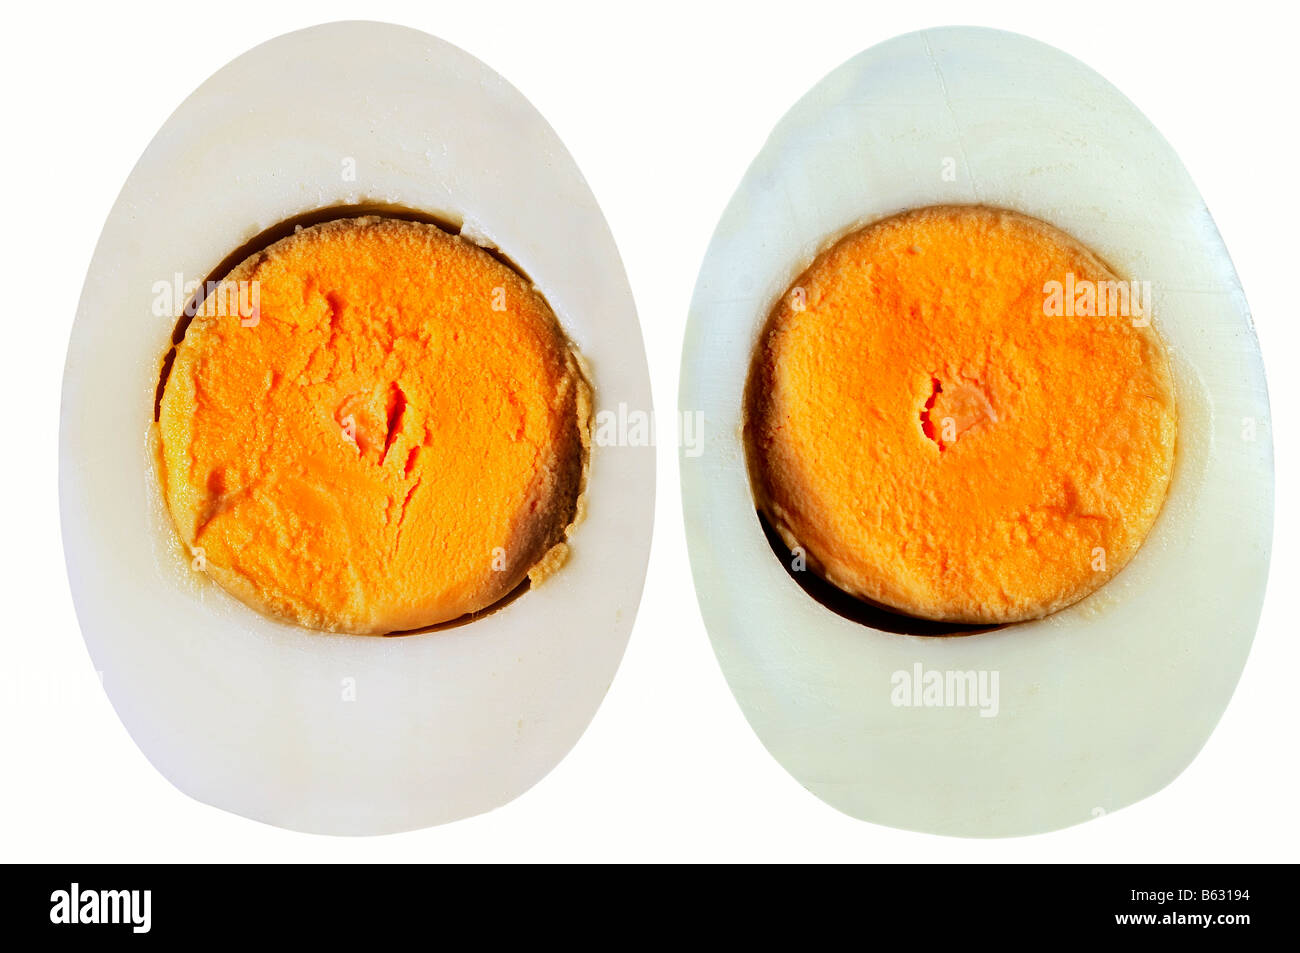 https://c8.alamy.com/comp/B63194/detail-of-the-two-hard-boiled-eggs-B63194.jpg